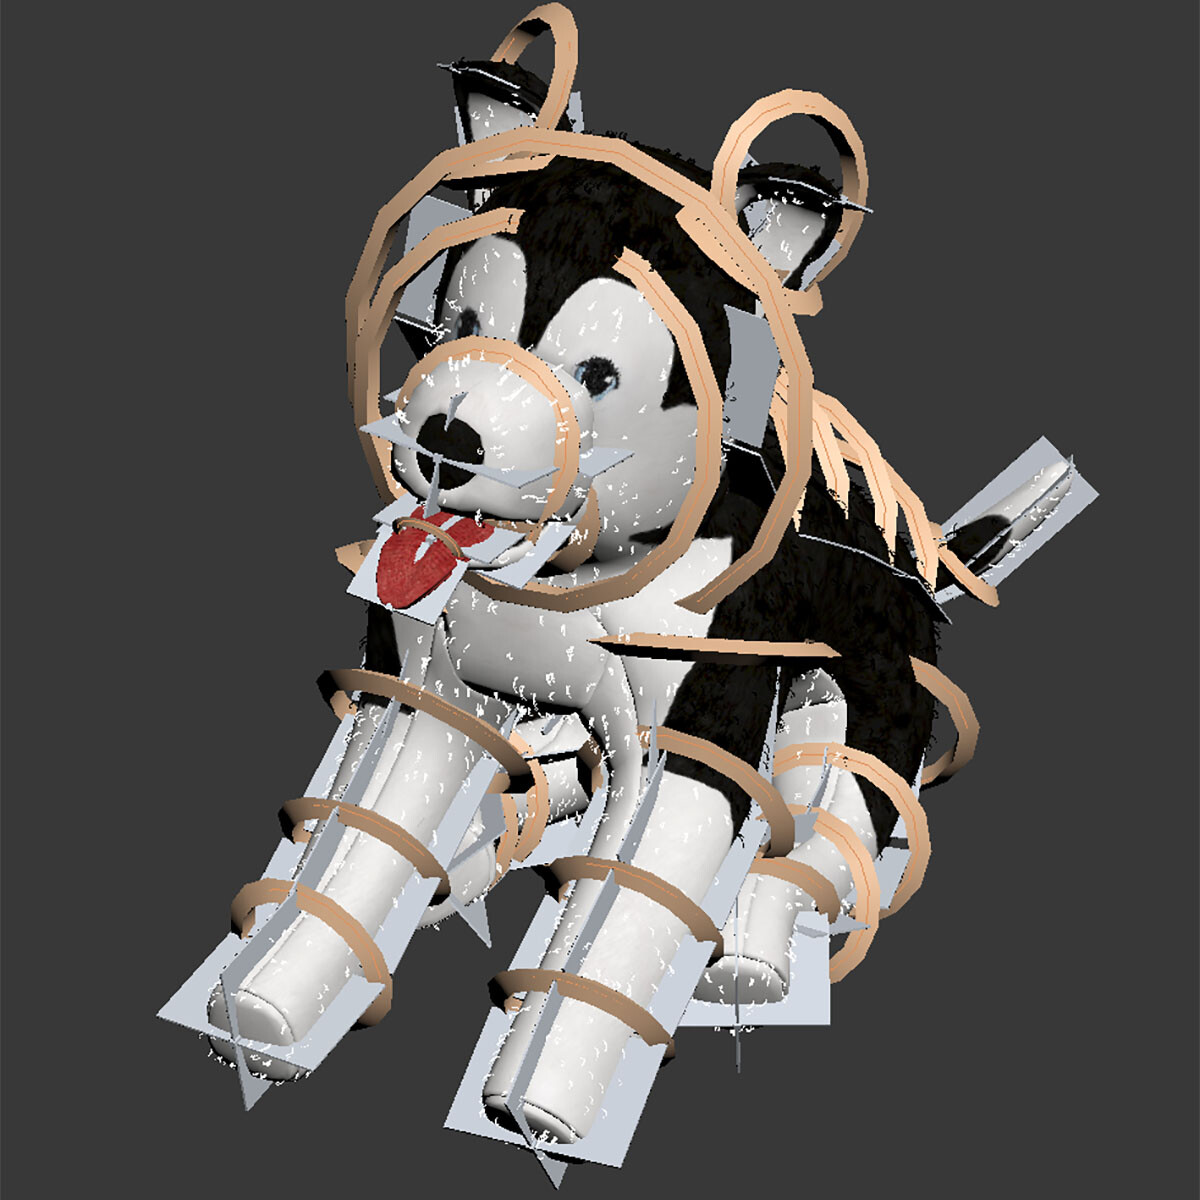 ArtStation - Soft toy dog siberian husky (LIVLIG)ikea